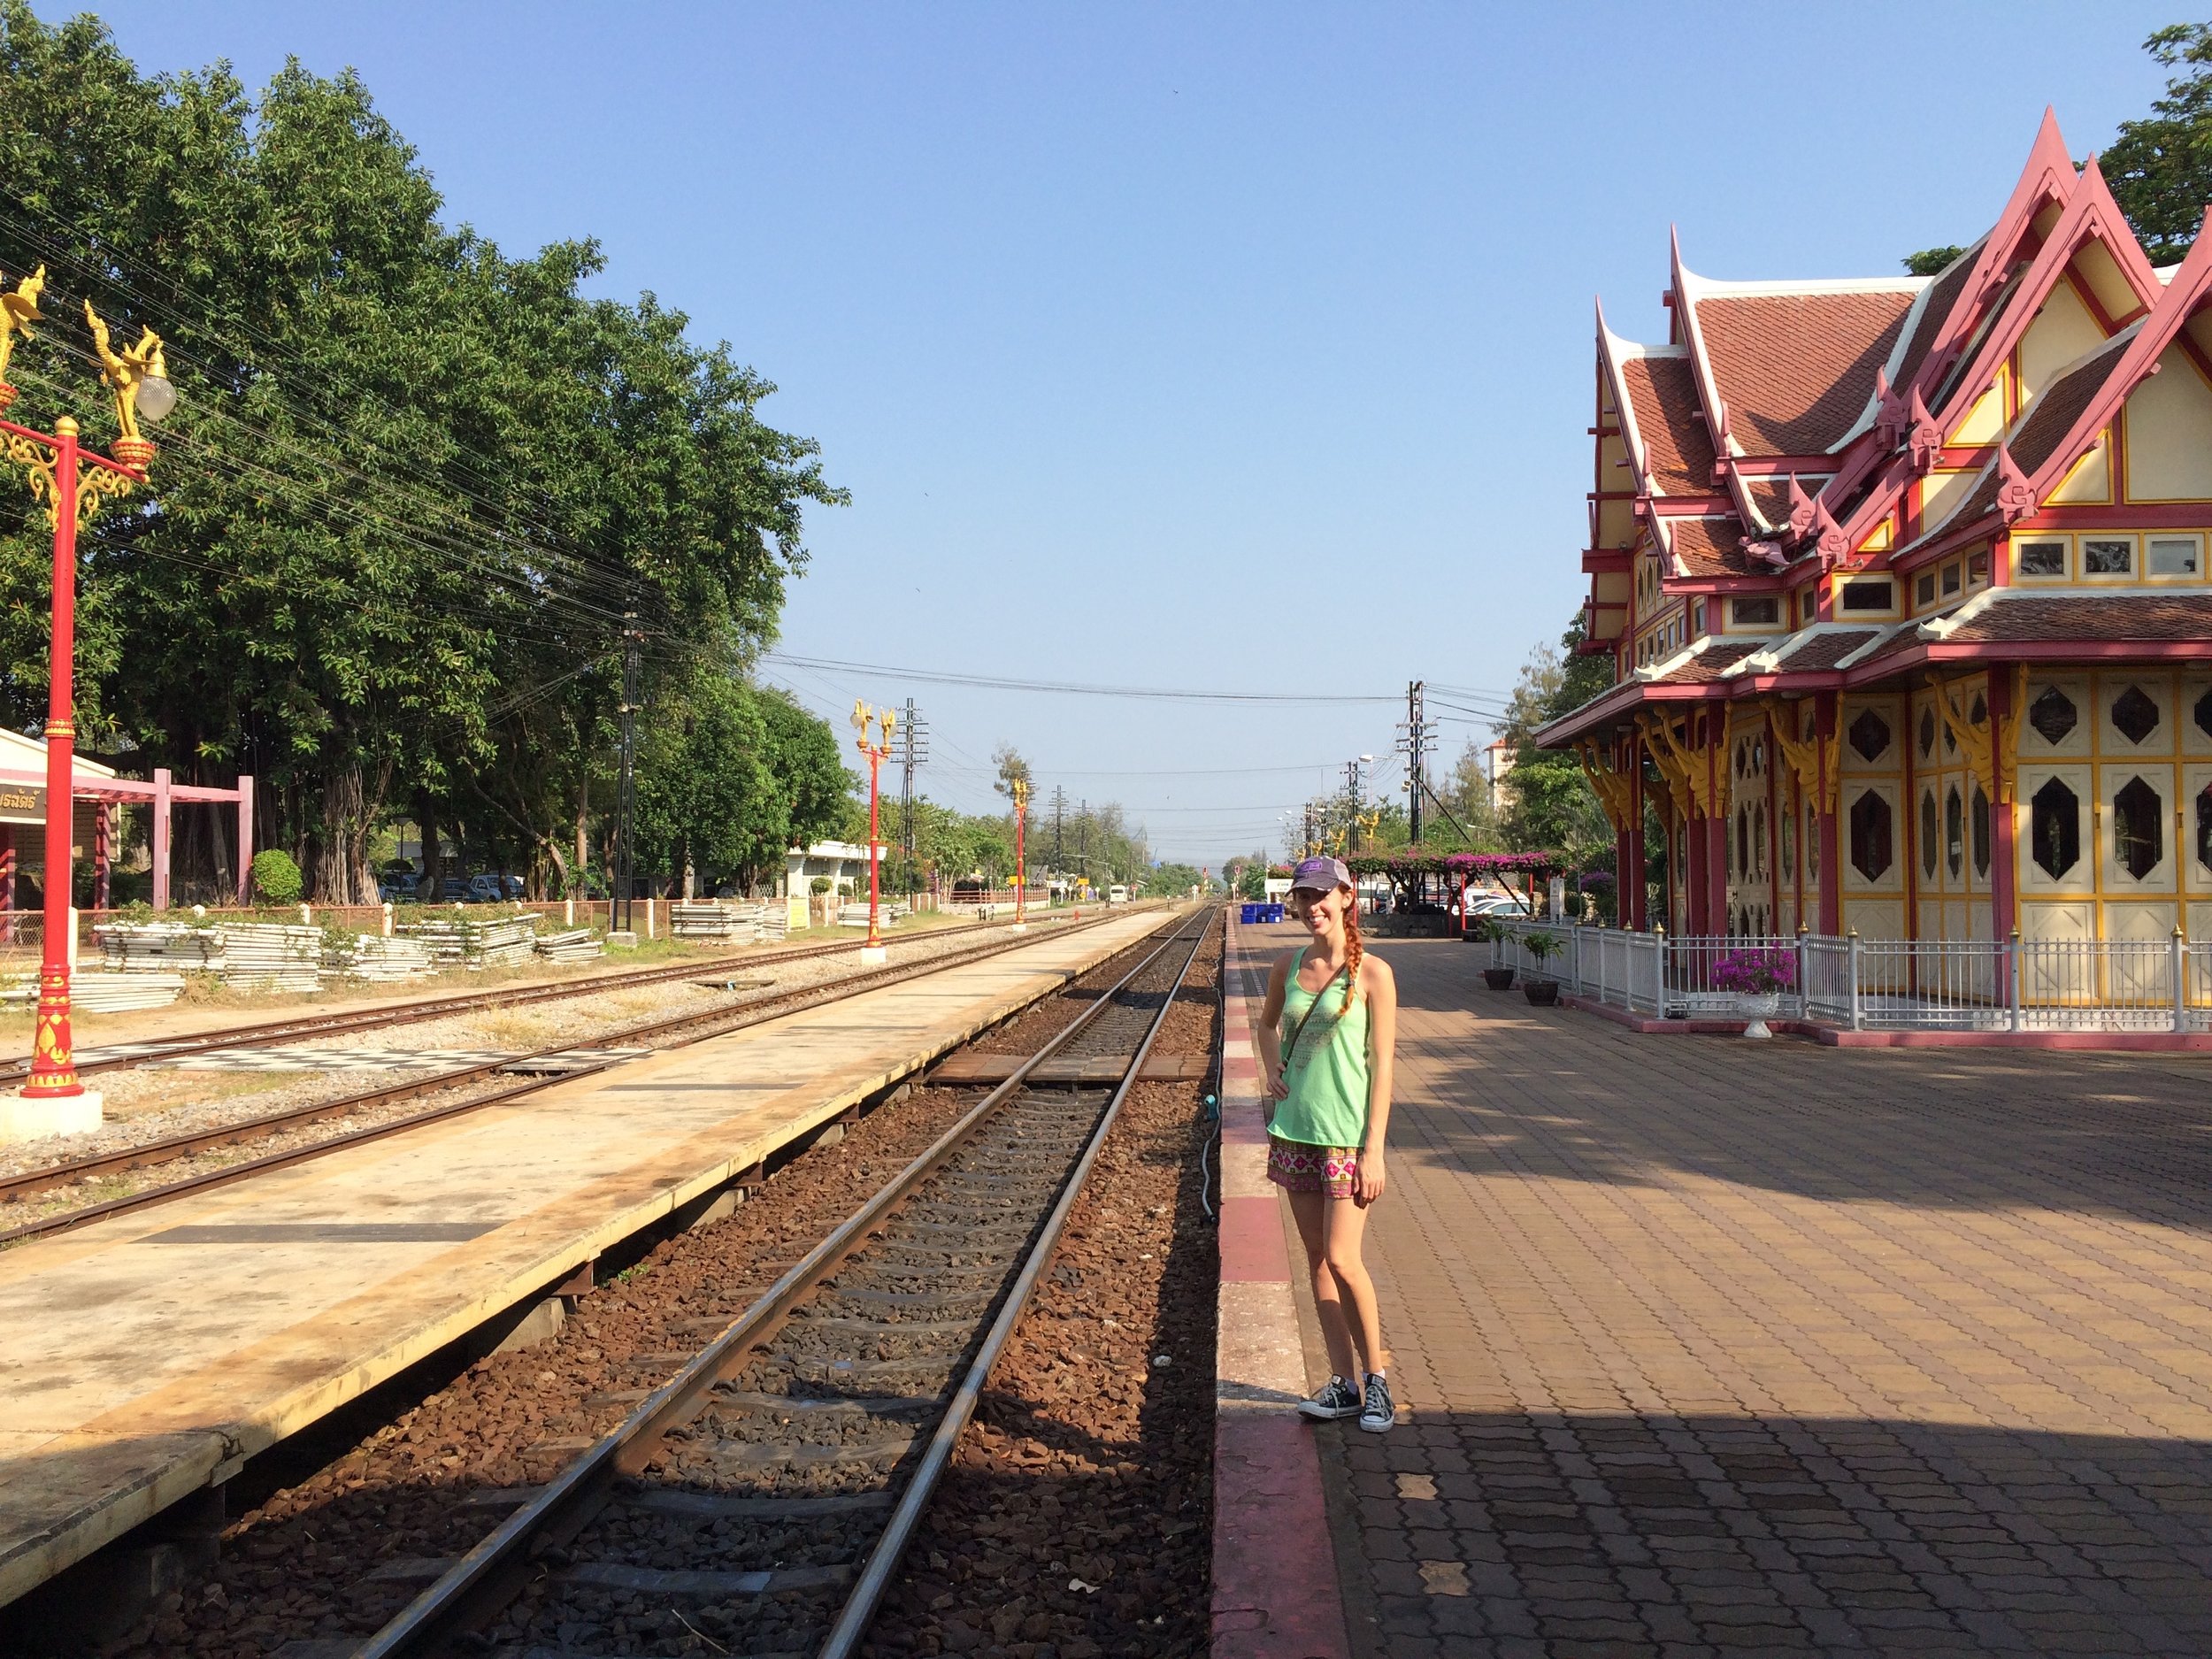  Train station in Hua Hin, Thailand 